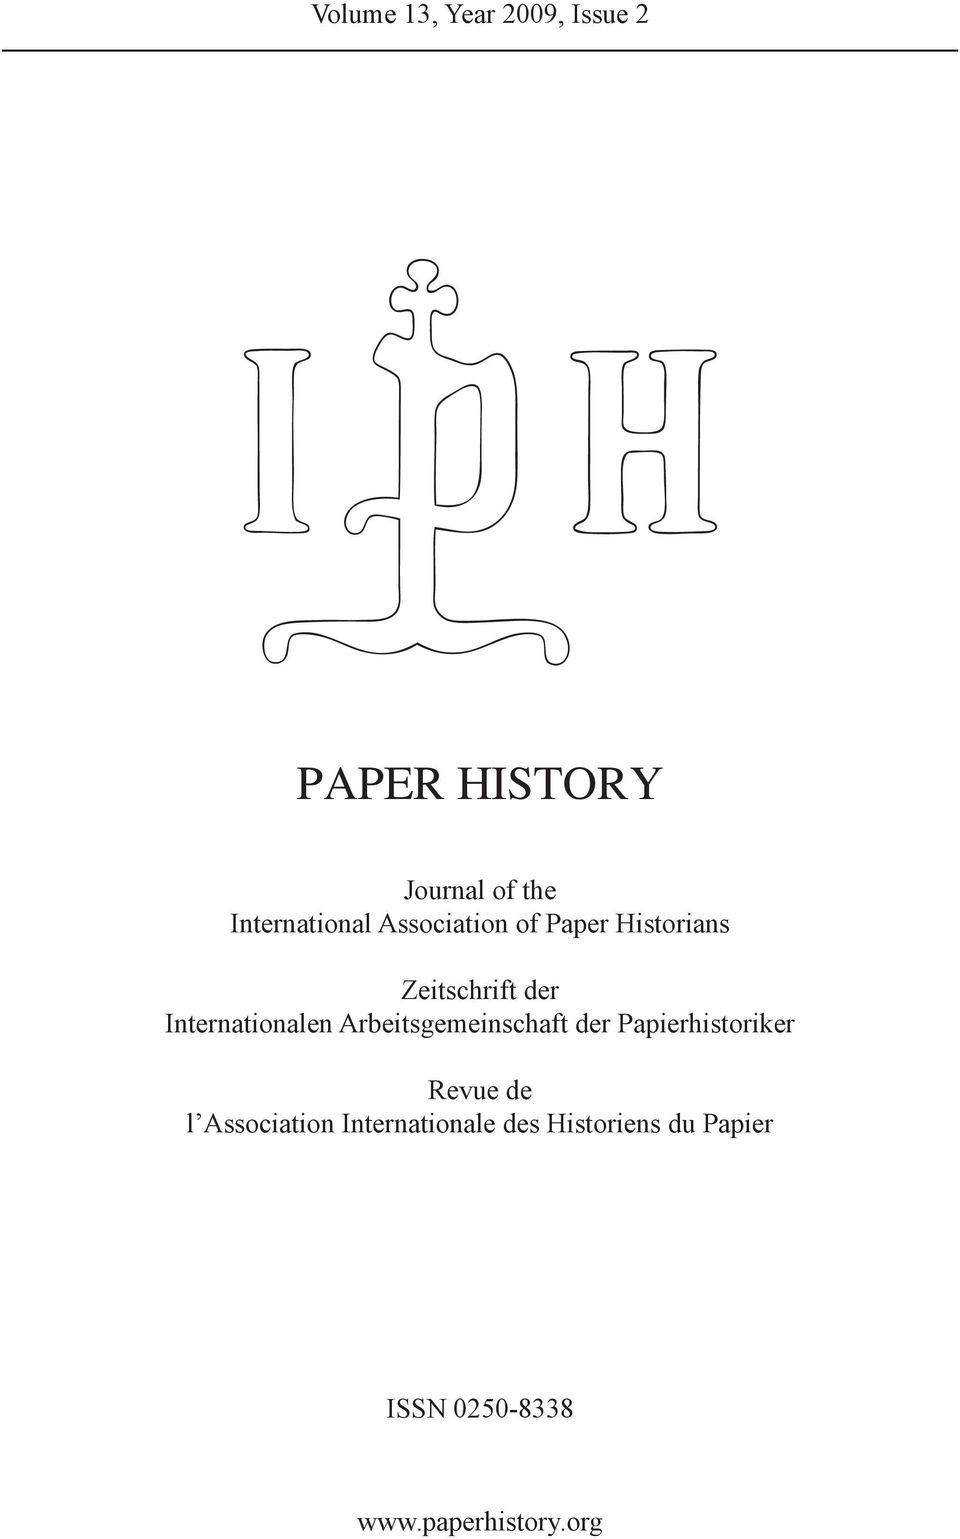 Internationalen Arbeitsgemeinschaft der Papierhistoriker Revue de l